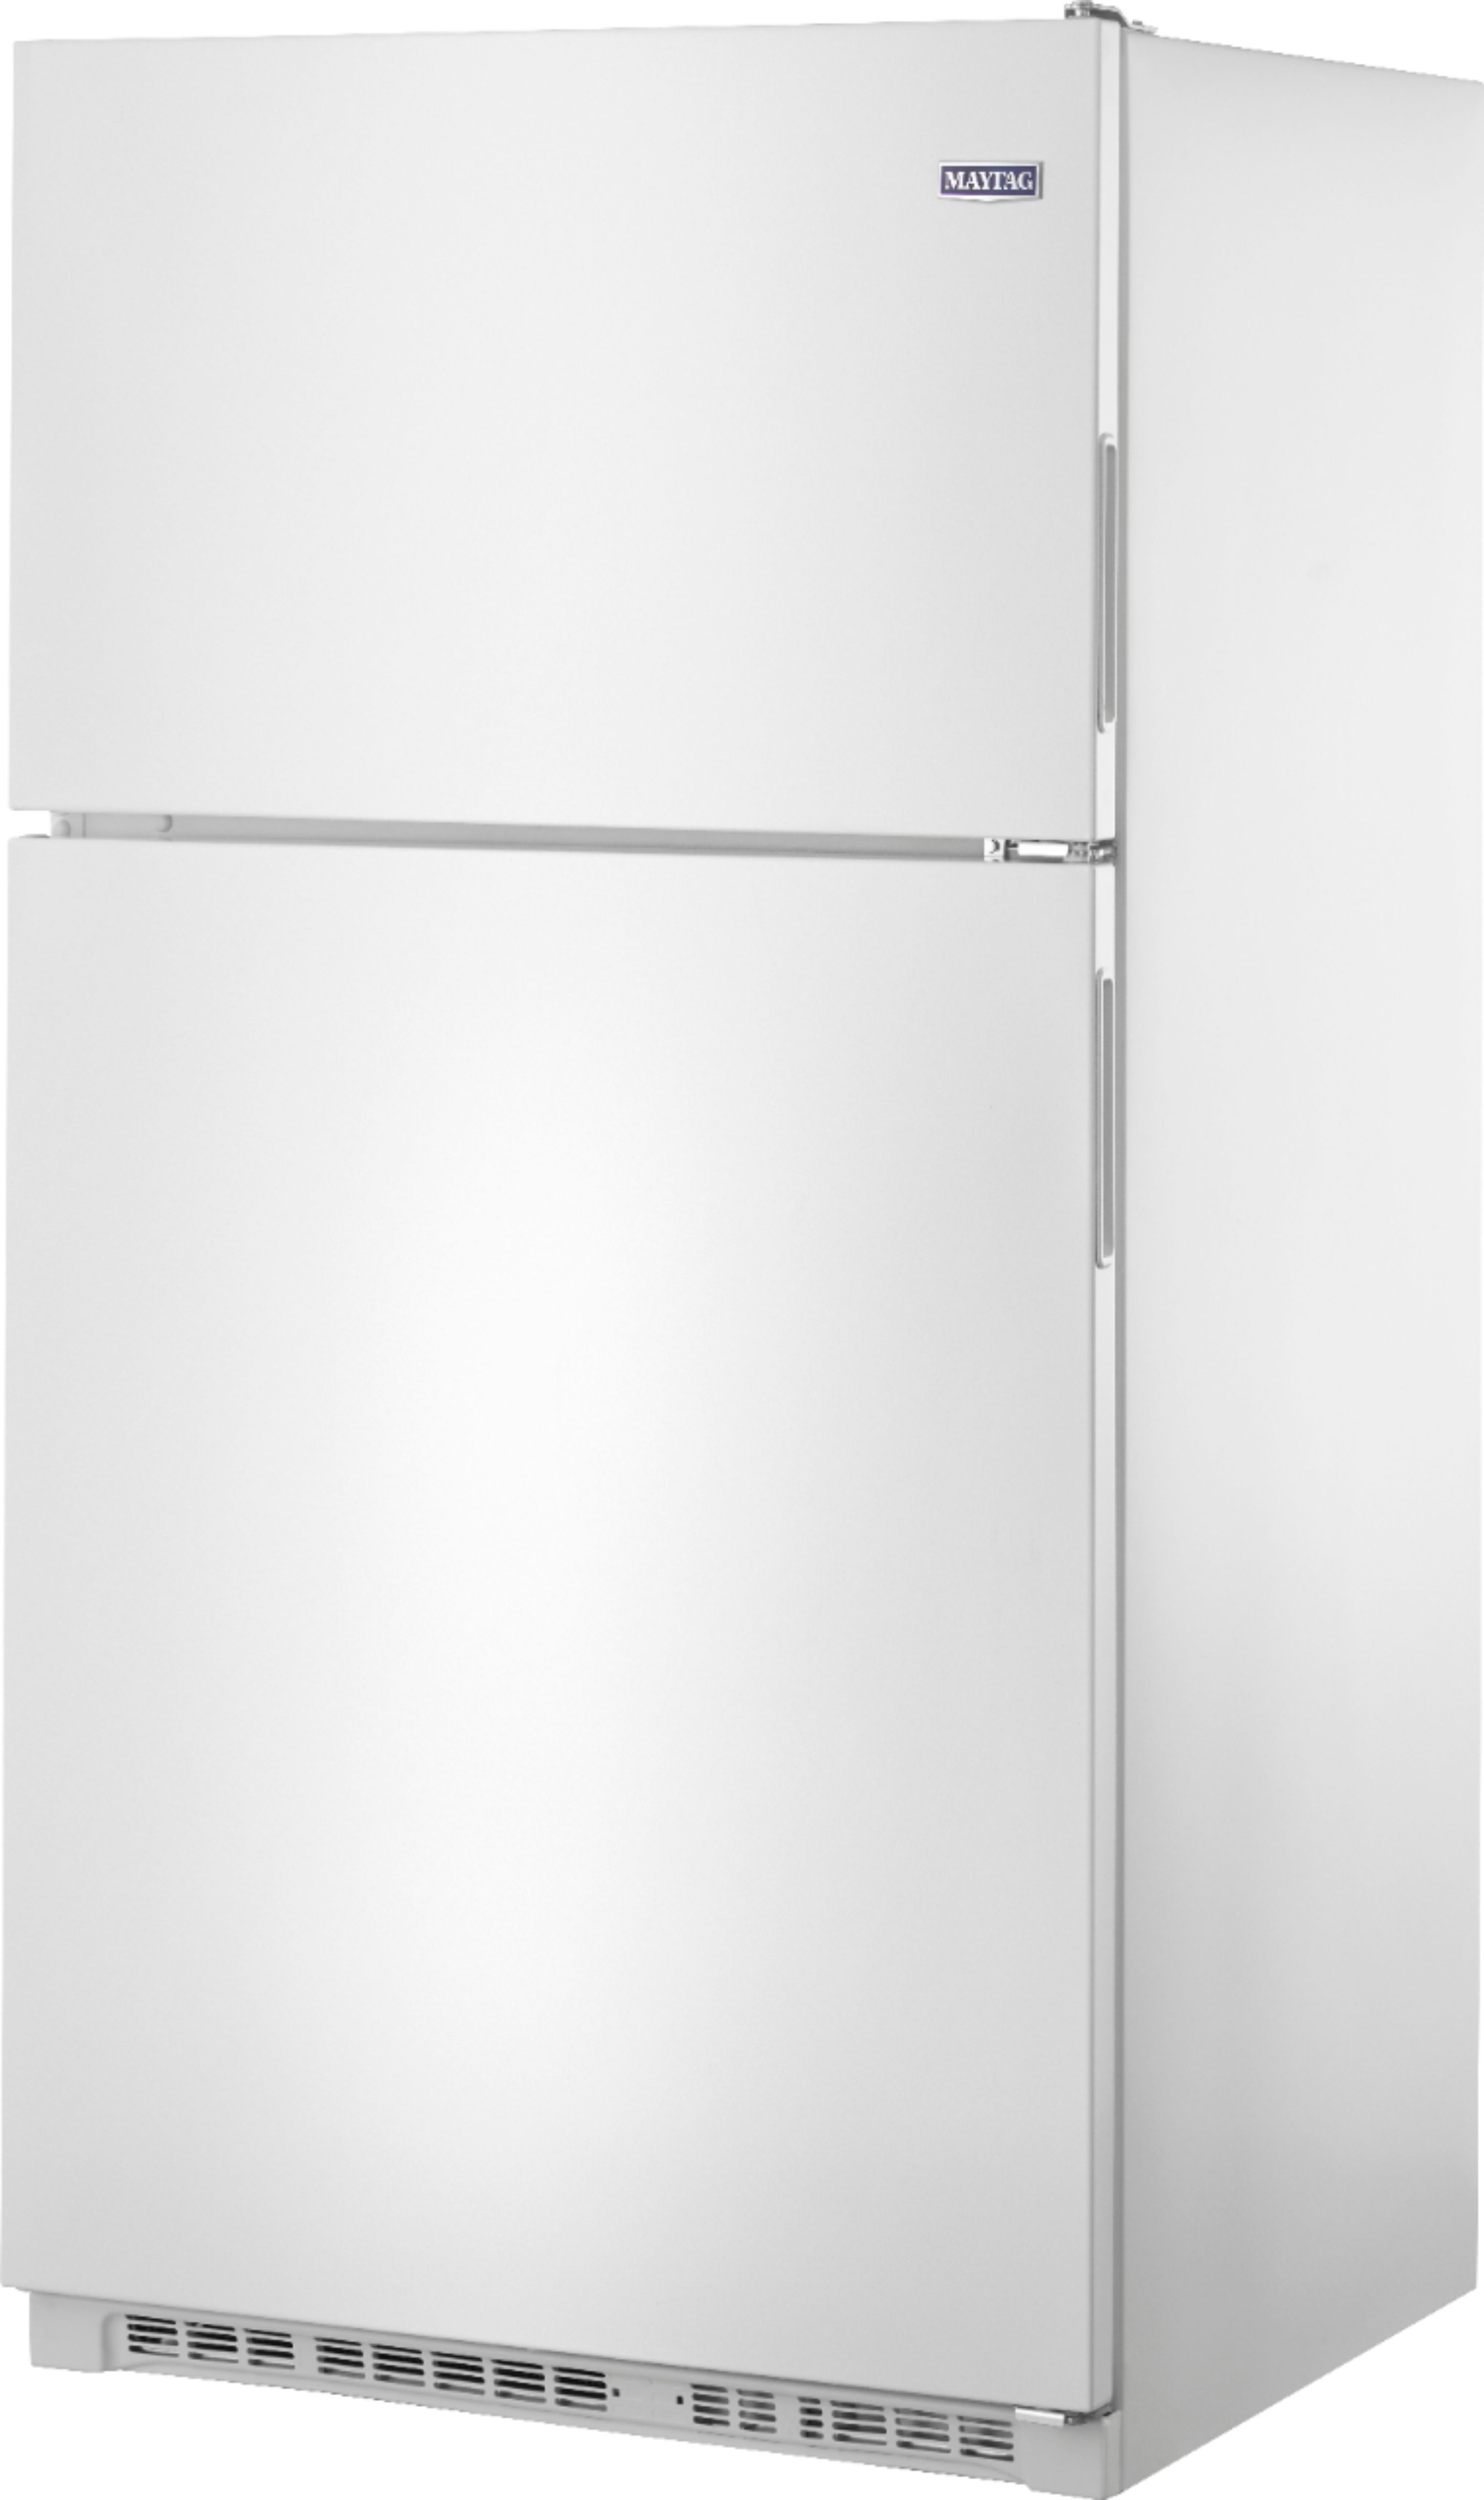 Left View: Whirlpool - 19.2 Cu. Ft. Top-Freezer Refrigerator - Black